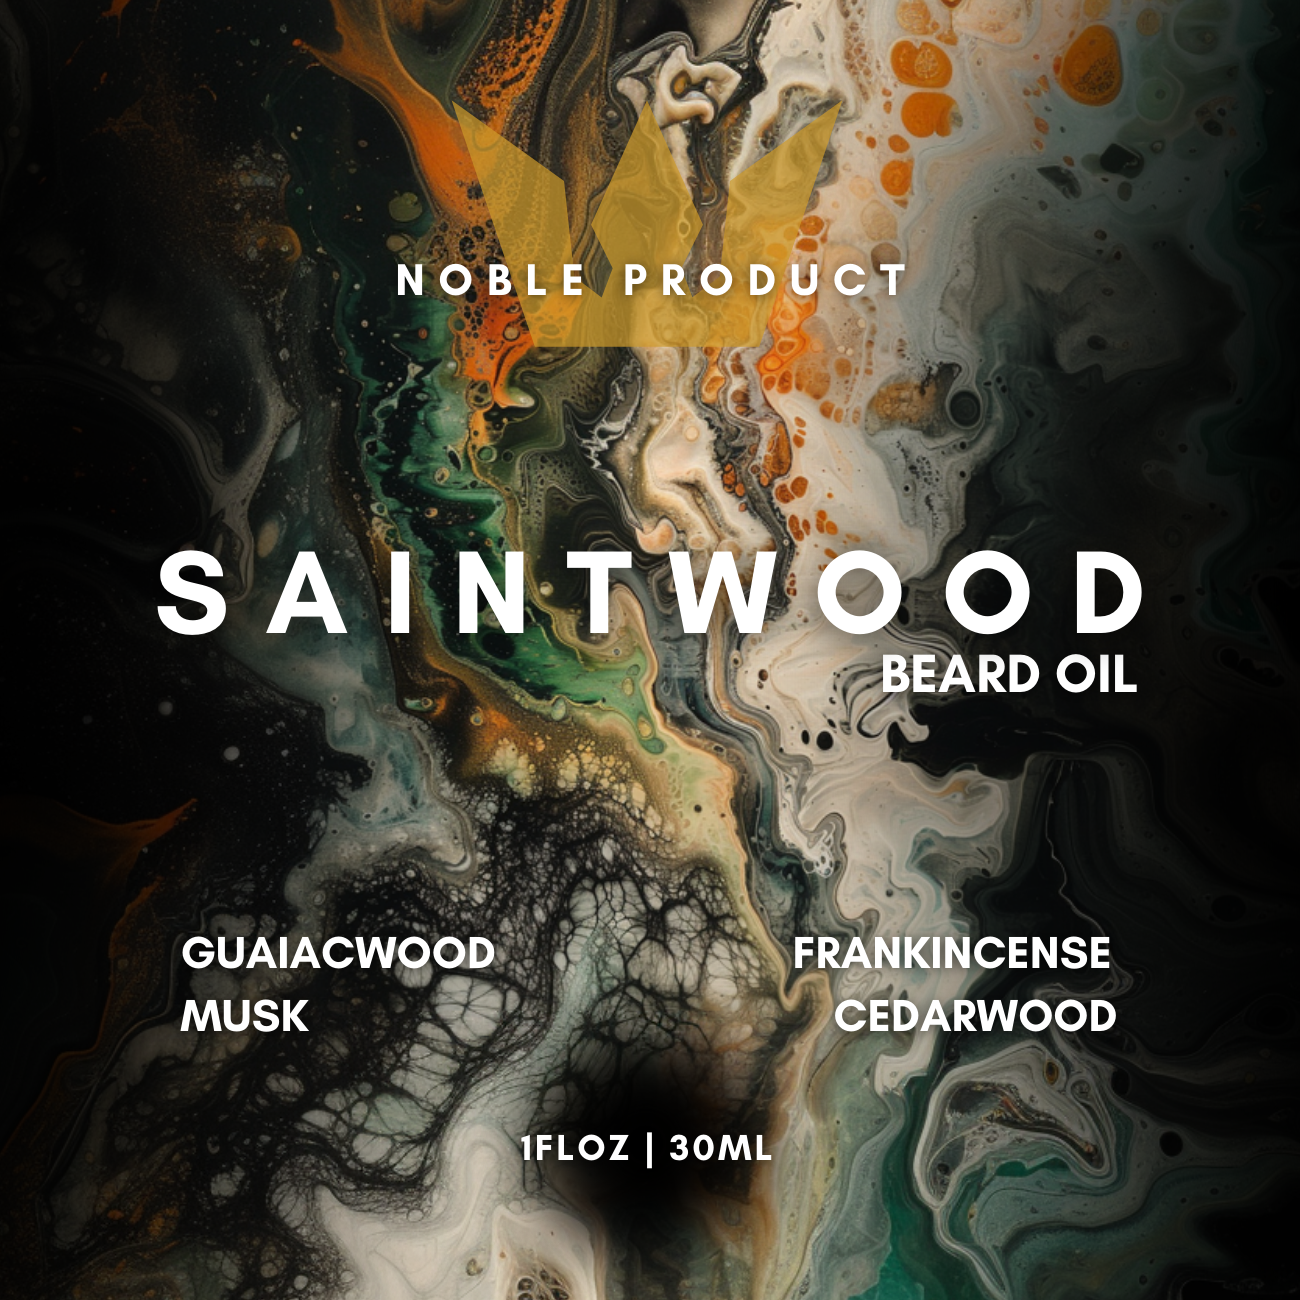 Saintwood 1 oz. Beard Oil